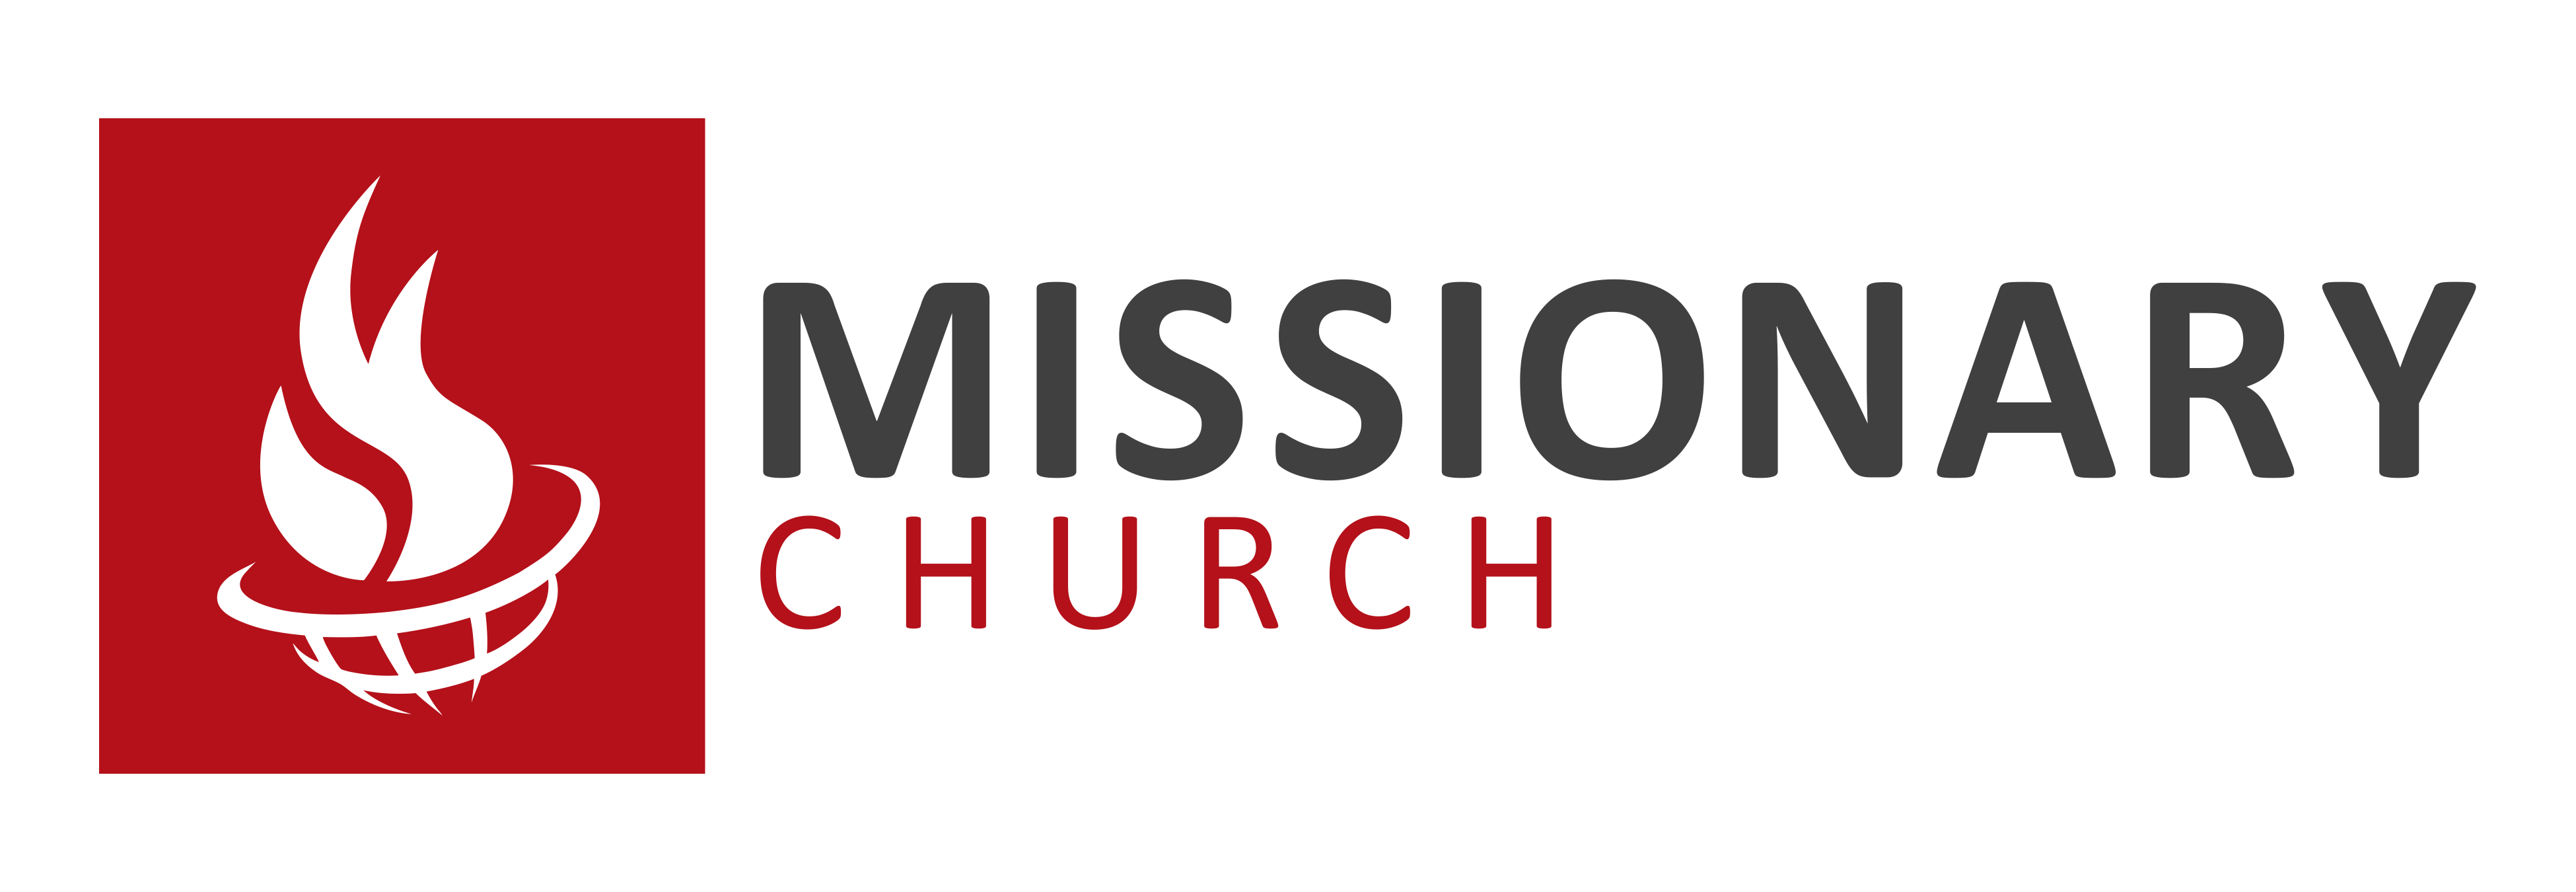 Missionary Church, USA logo